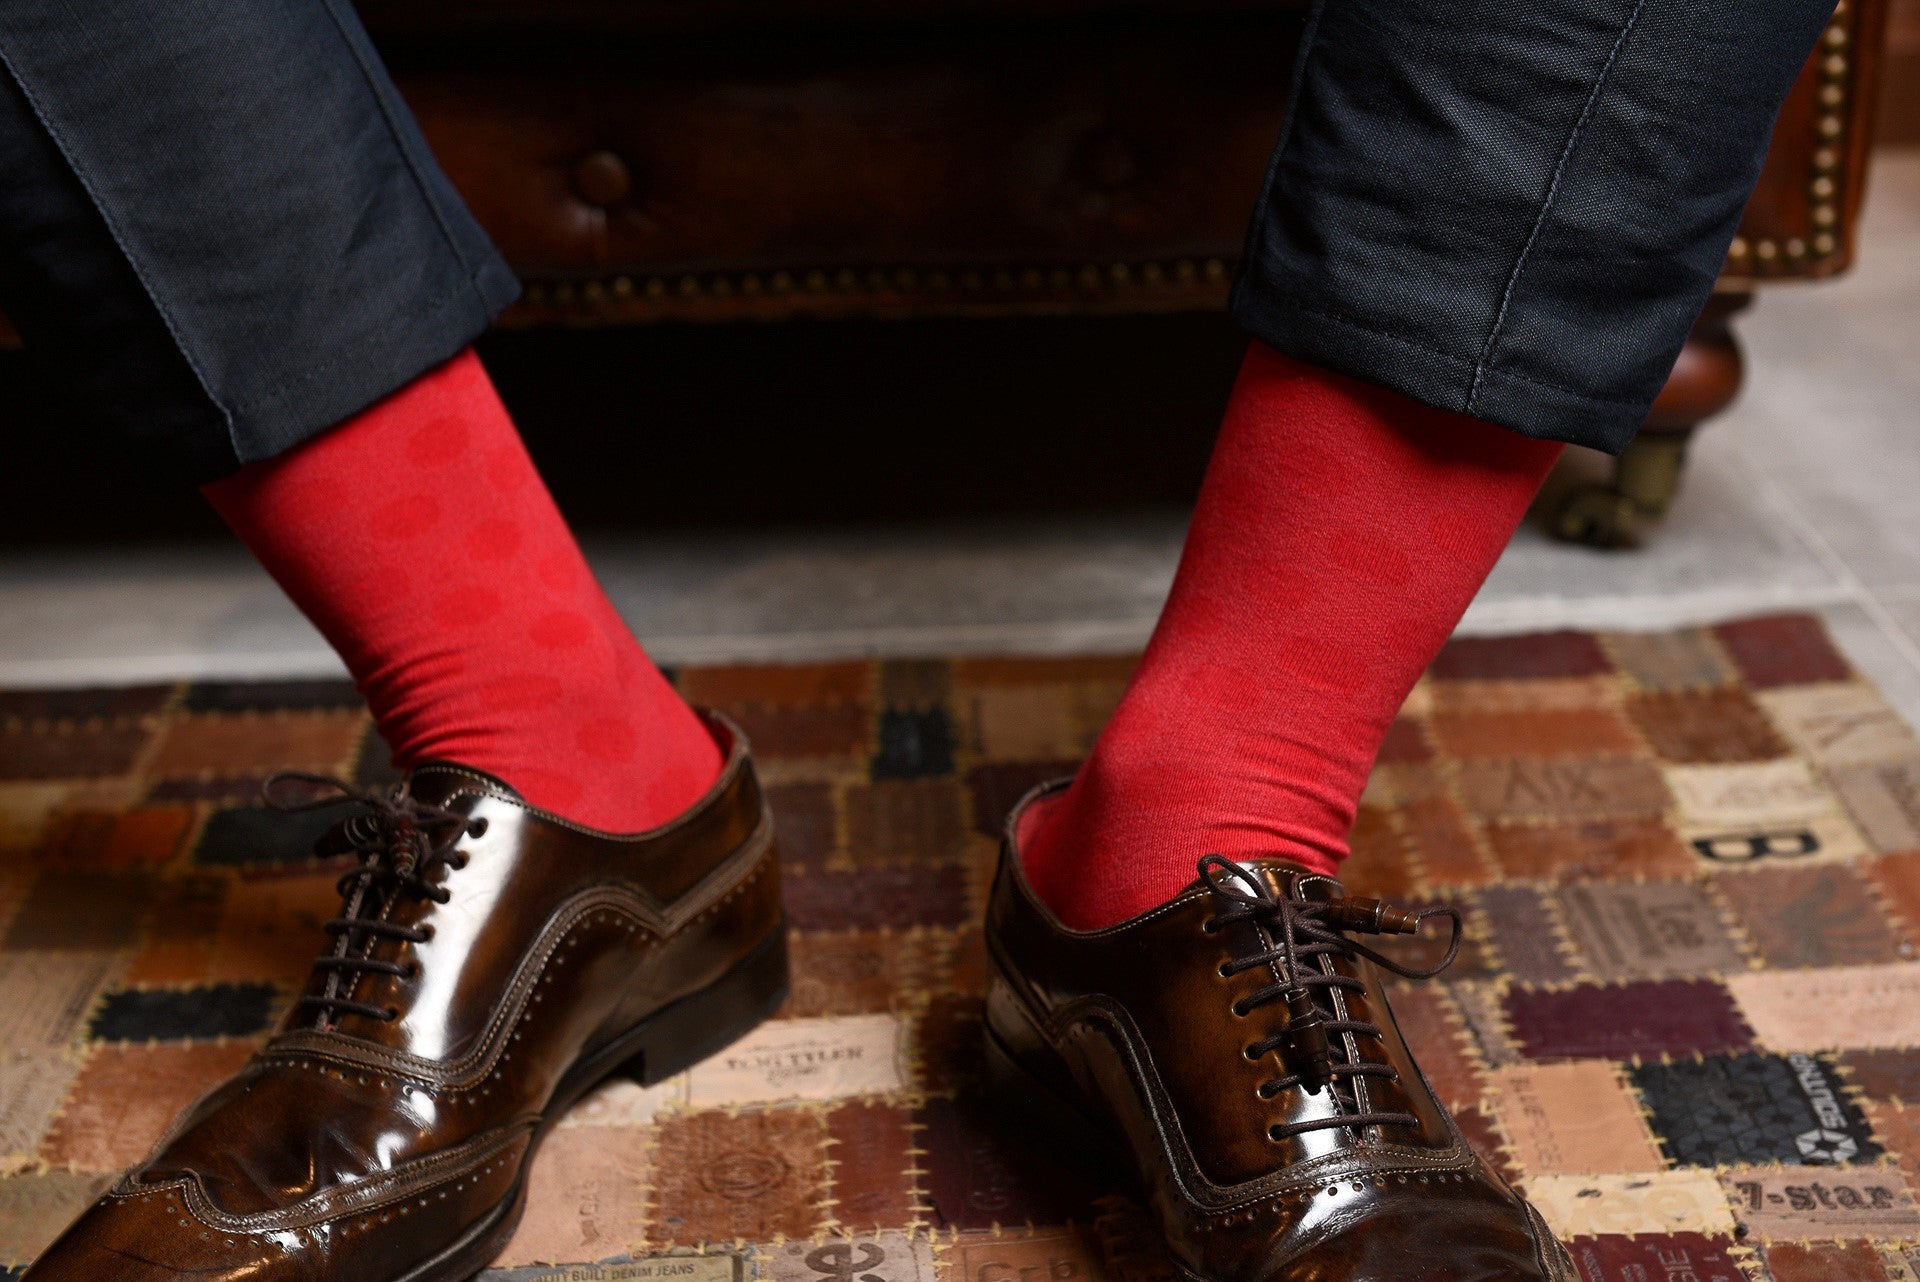 Men's Zicci Invisible Dots Dress Socks - Color Red